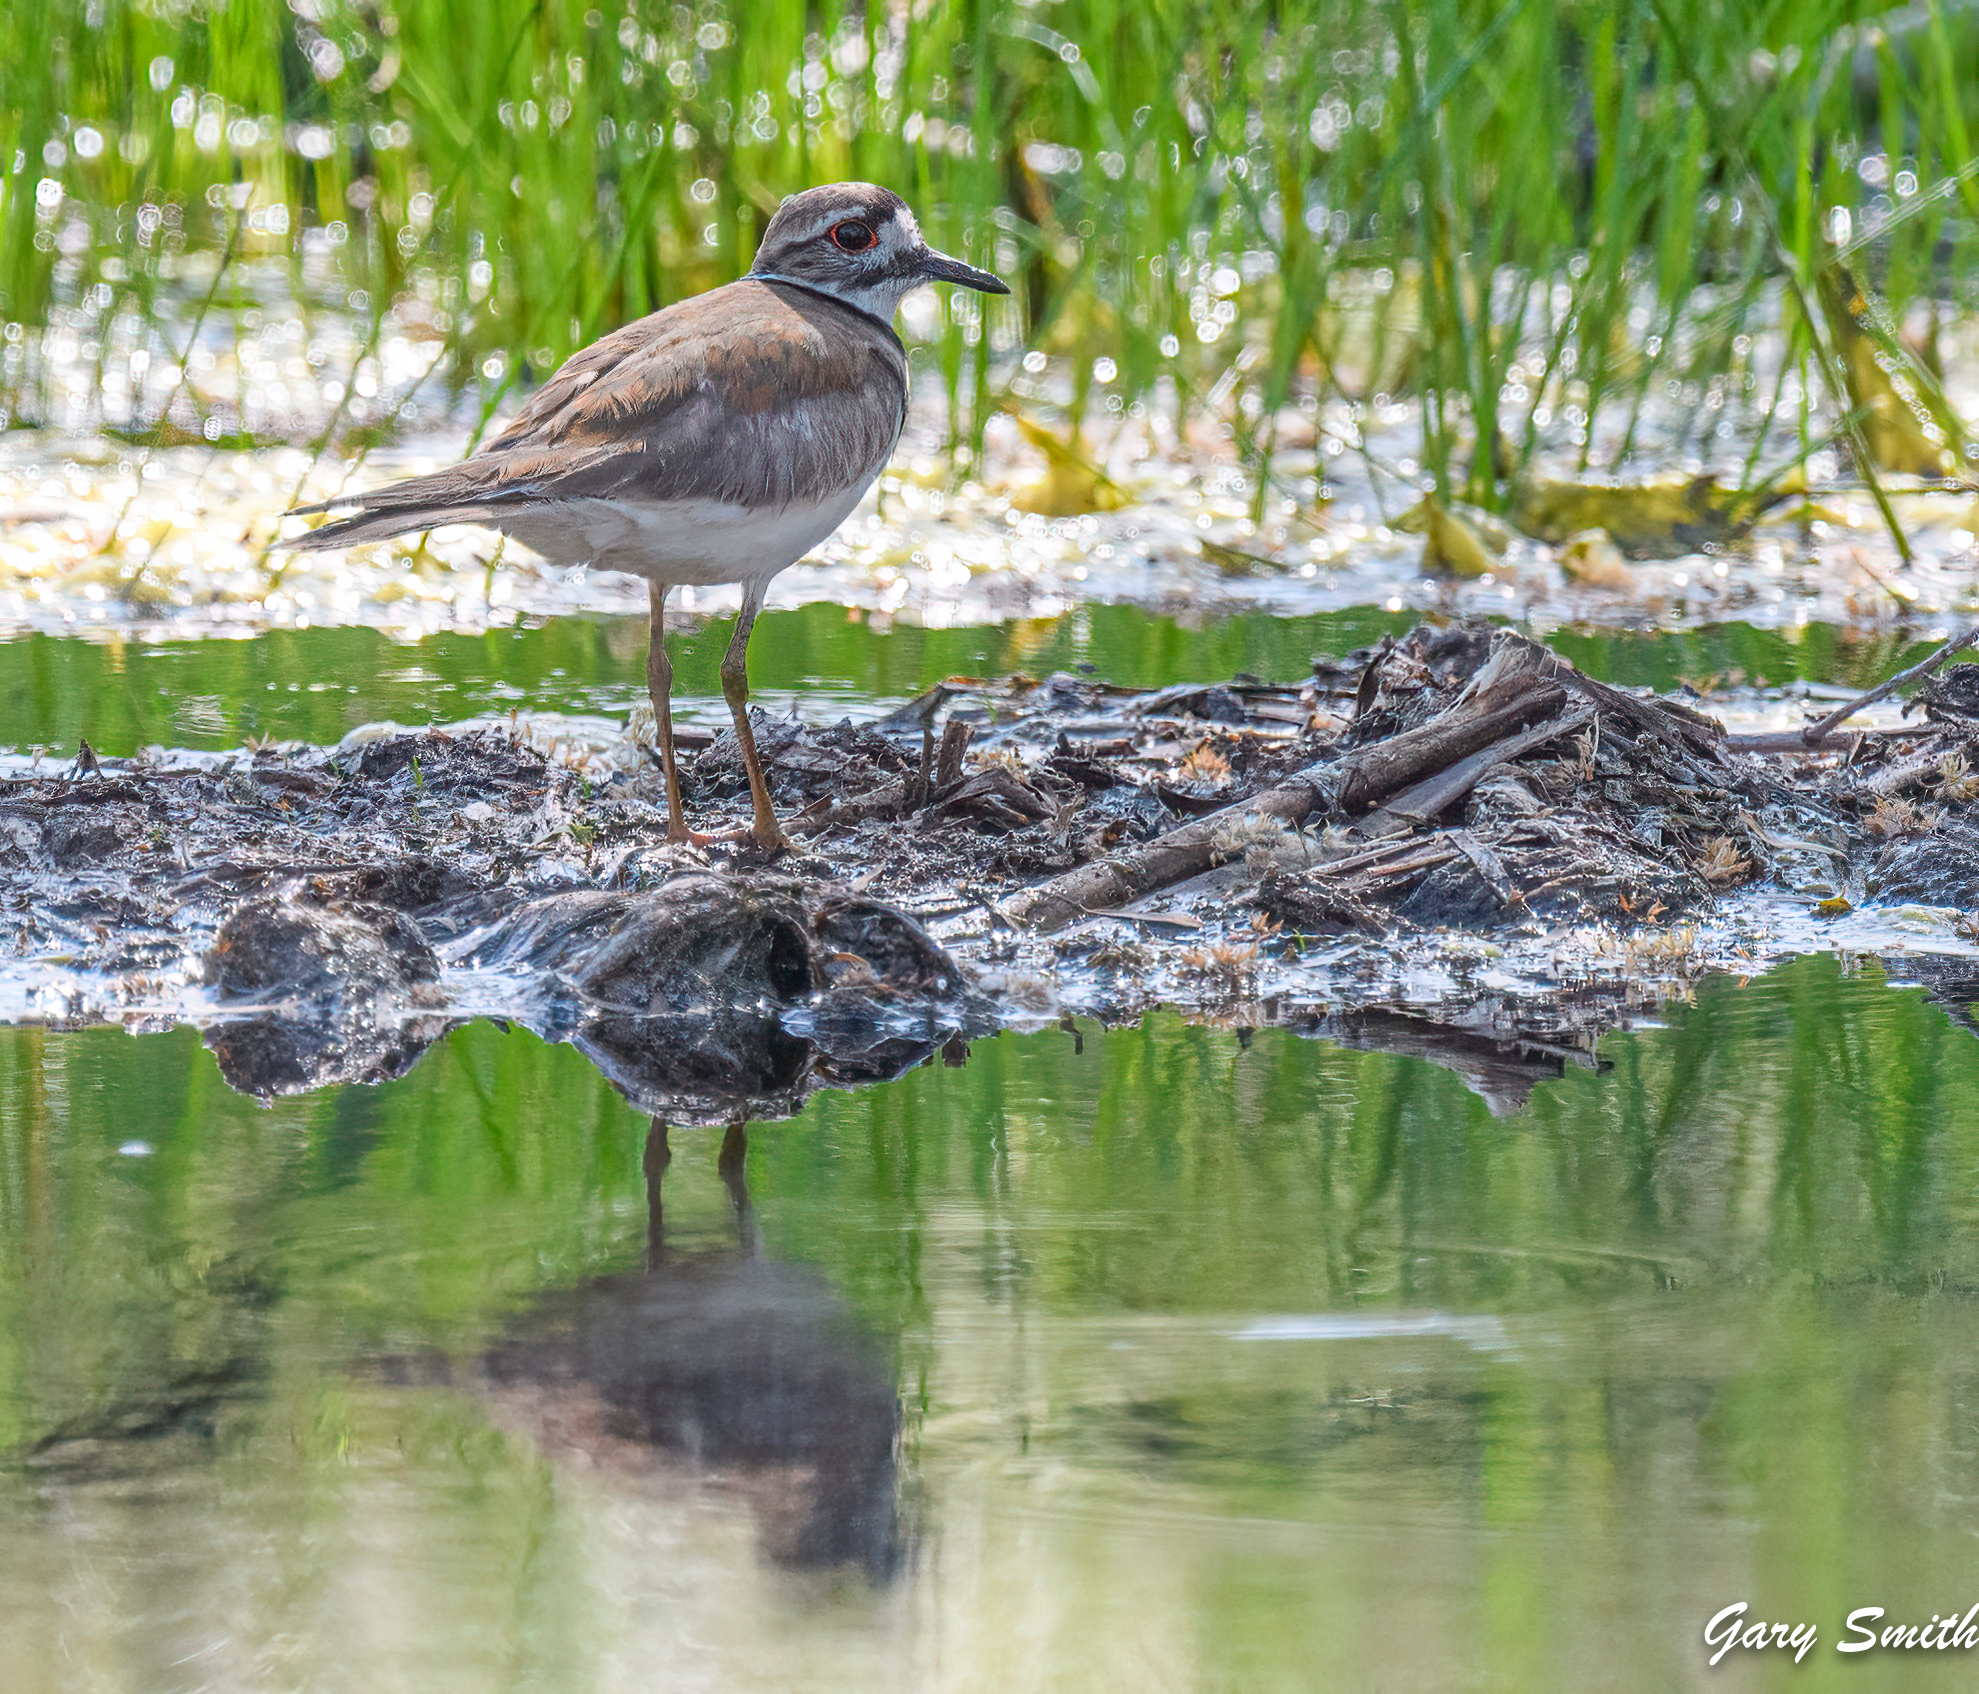 A killdeer at the Amerind Bird Pond